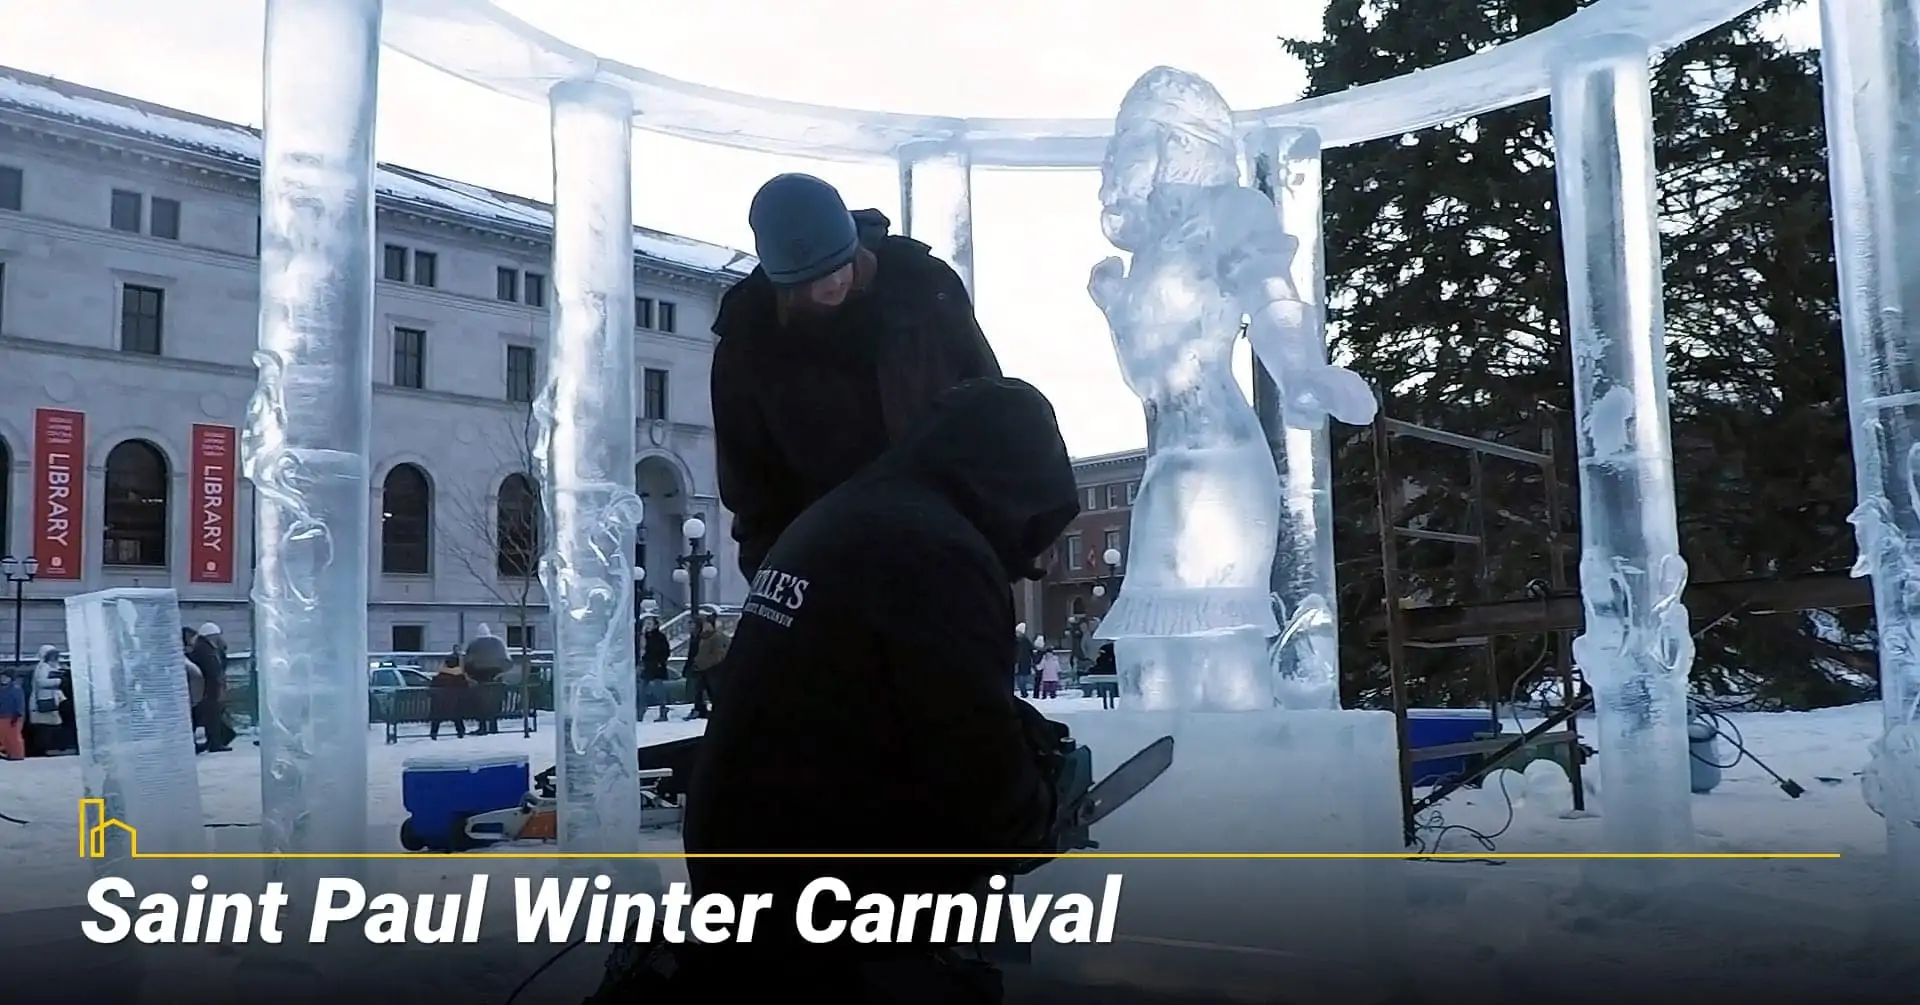 Saint Paul Winter Carnival, ice sculptures winter carnival